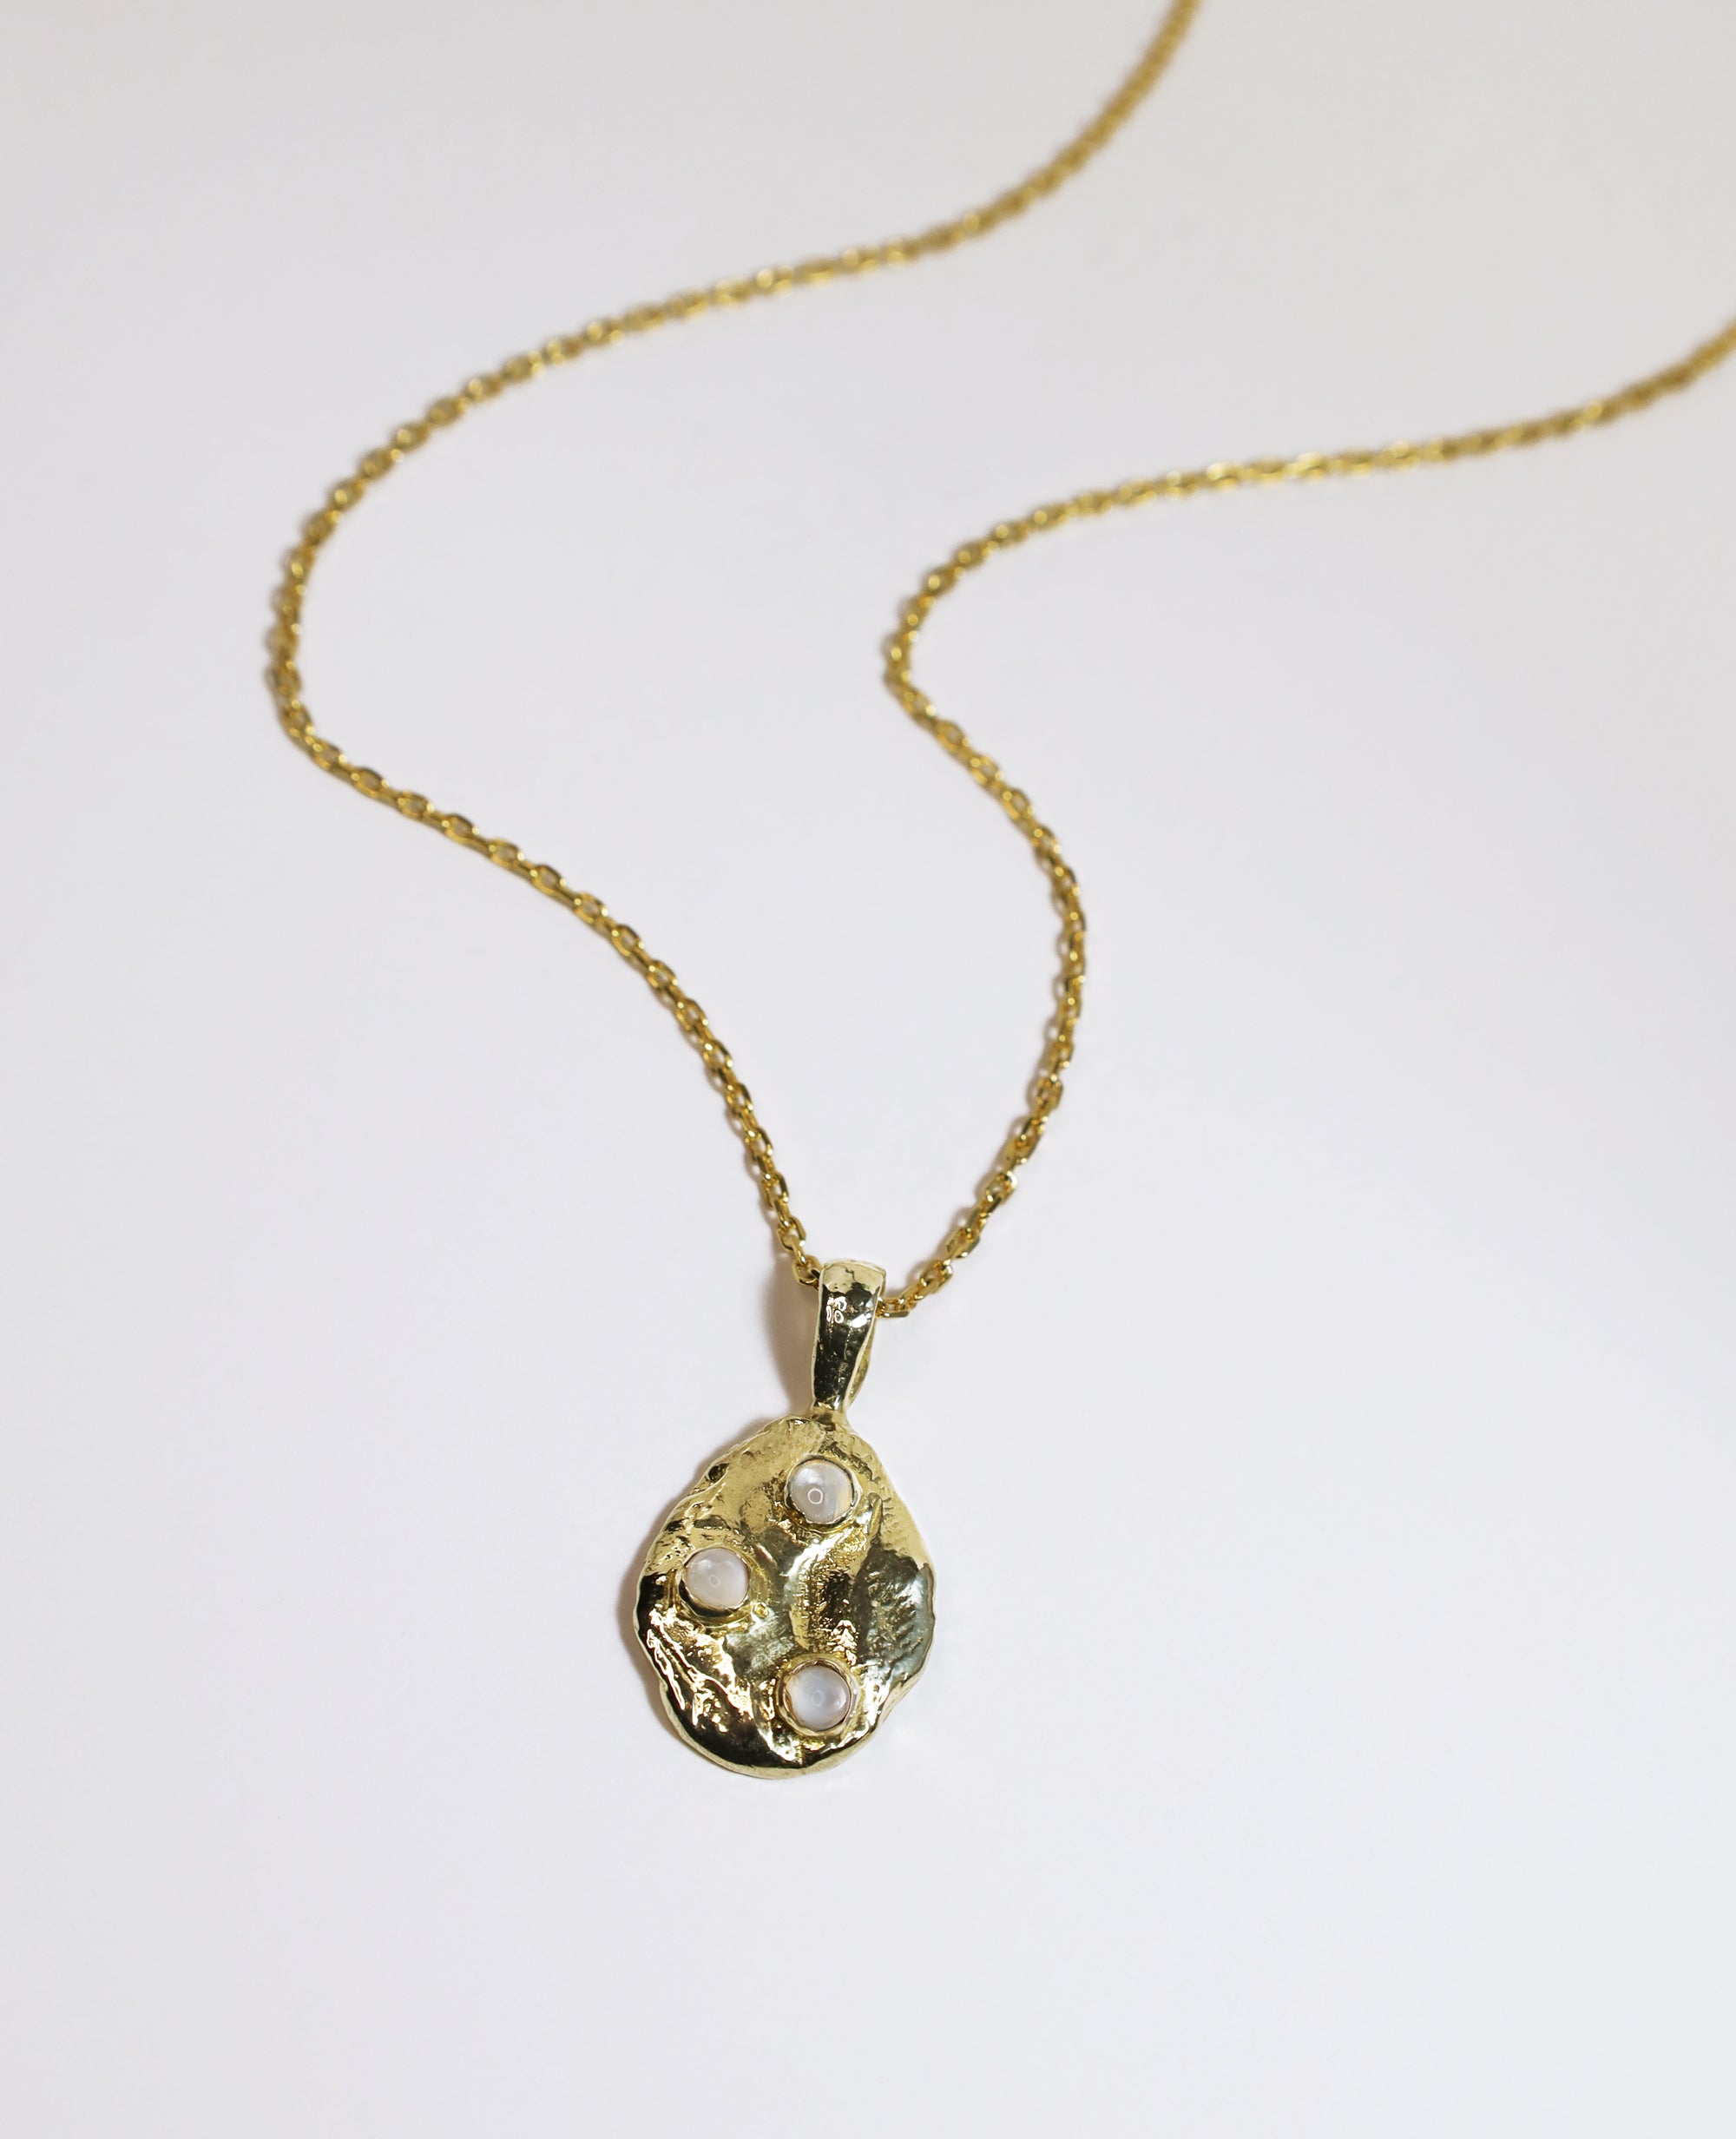 CELESTIAL SPORES // golden pendant - ORA-C jewelry - handmade jewelry by Montreal based independent designer Caroline Pham